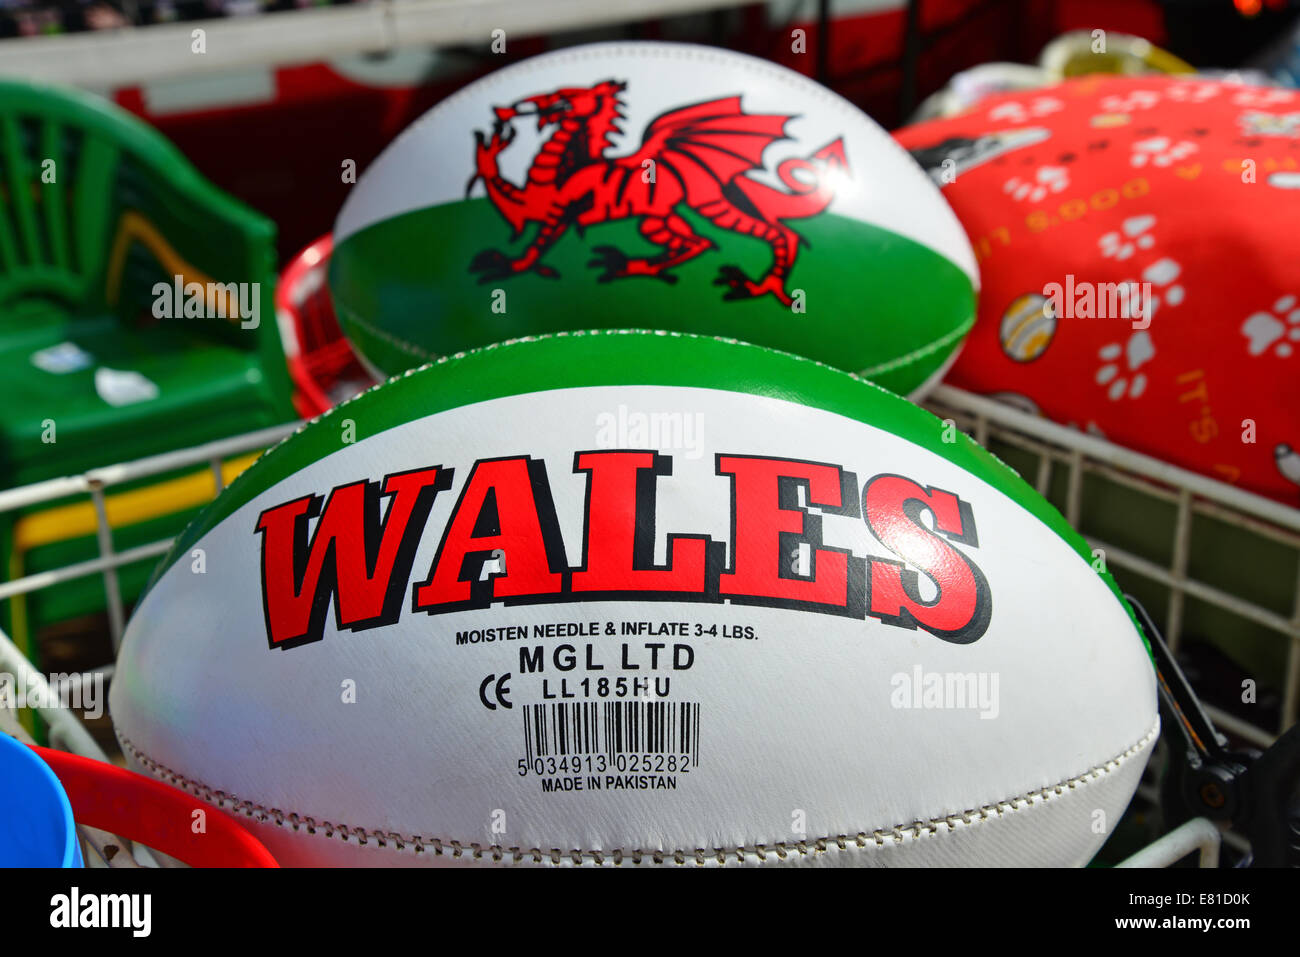 Ballons de rugby souvenirs gallois, High Street, Muro (Y Muro), Denbighshire (Sir Ddinbych), pays de Galles, Royaume-Uni Banque D'Images